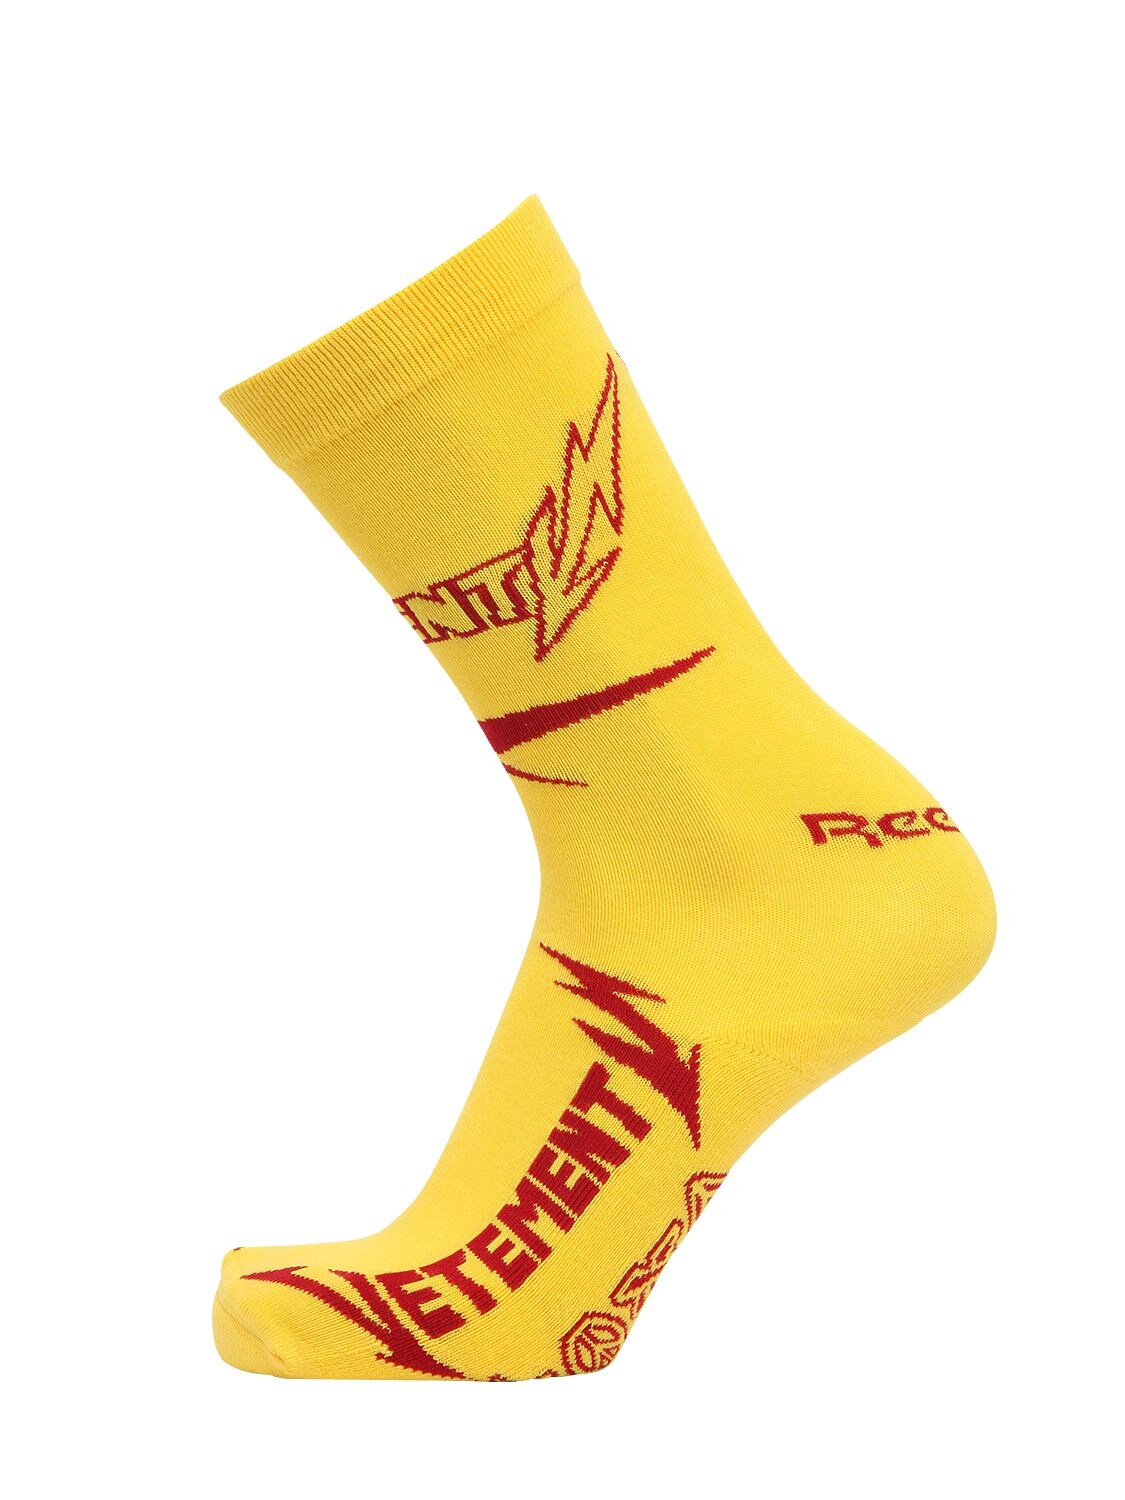 Vetements Reebok Metal Cotton Blend Socks In Yellow/red